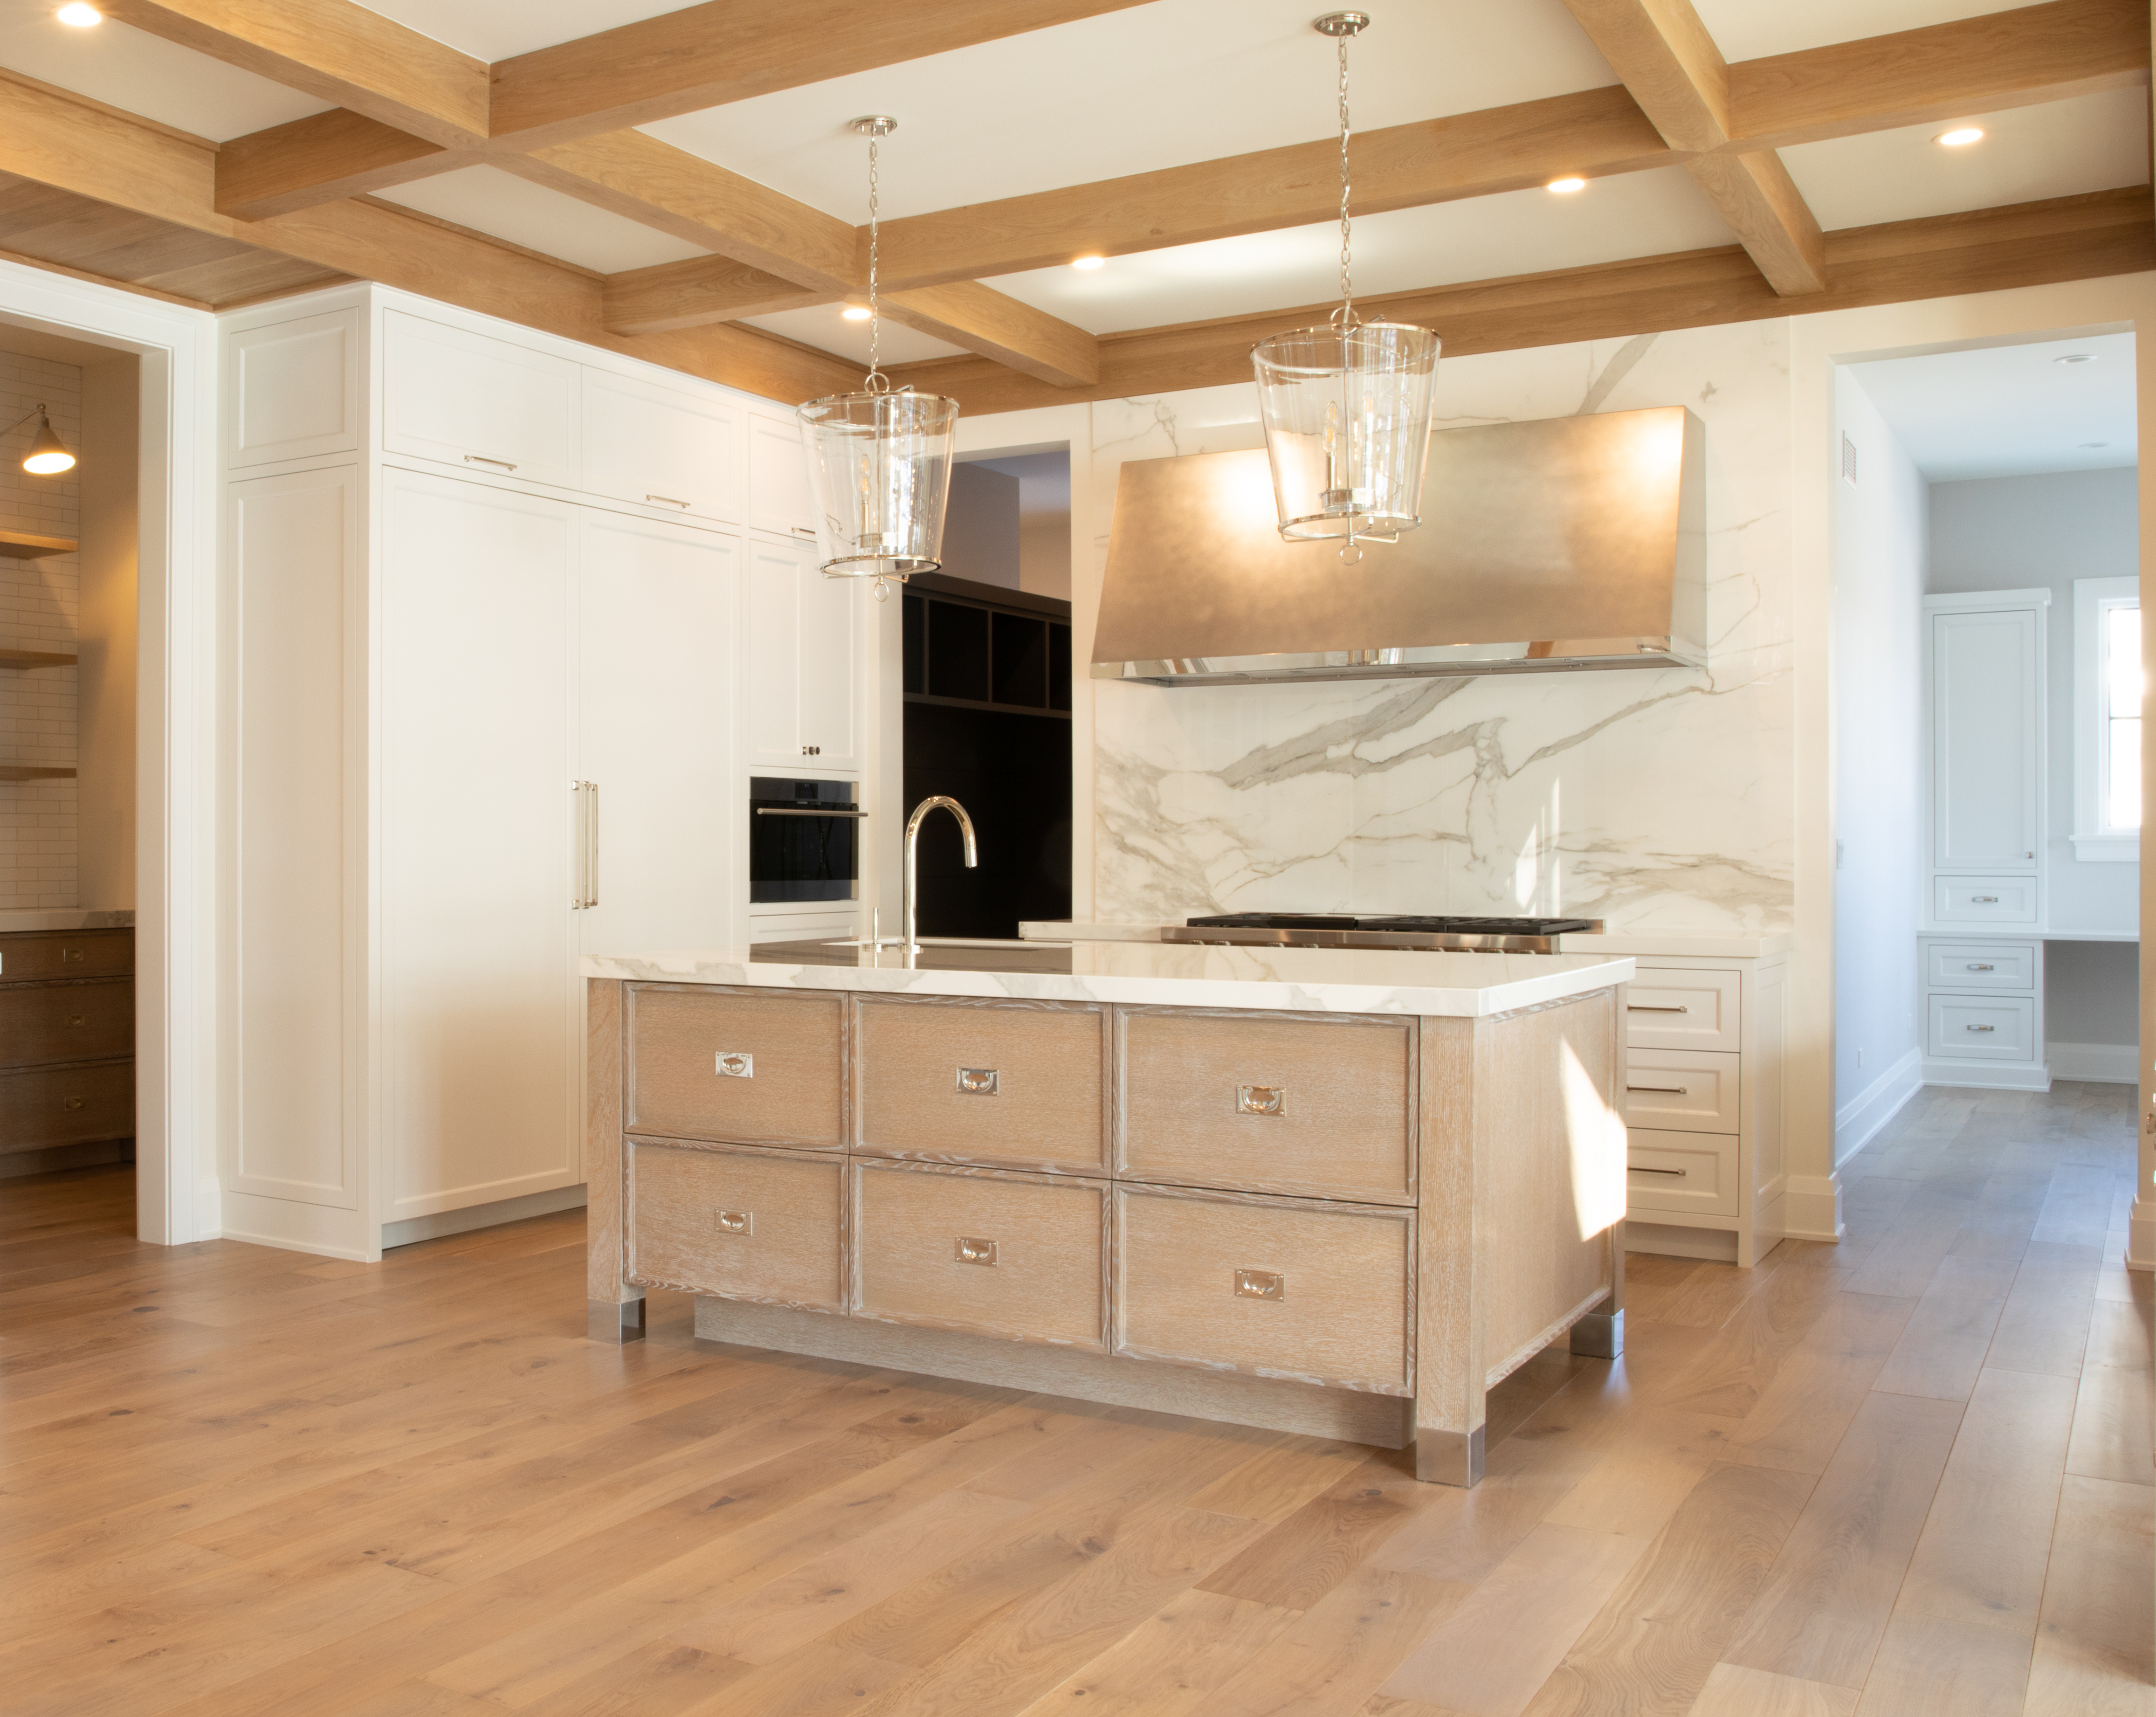 engineered hardwood floor in a kitchen instead of solid hardwood flooring